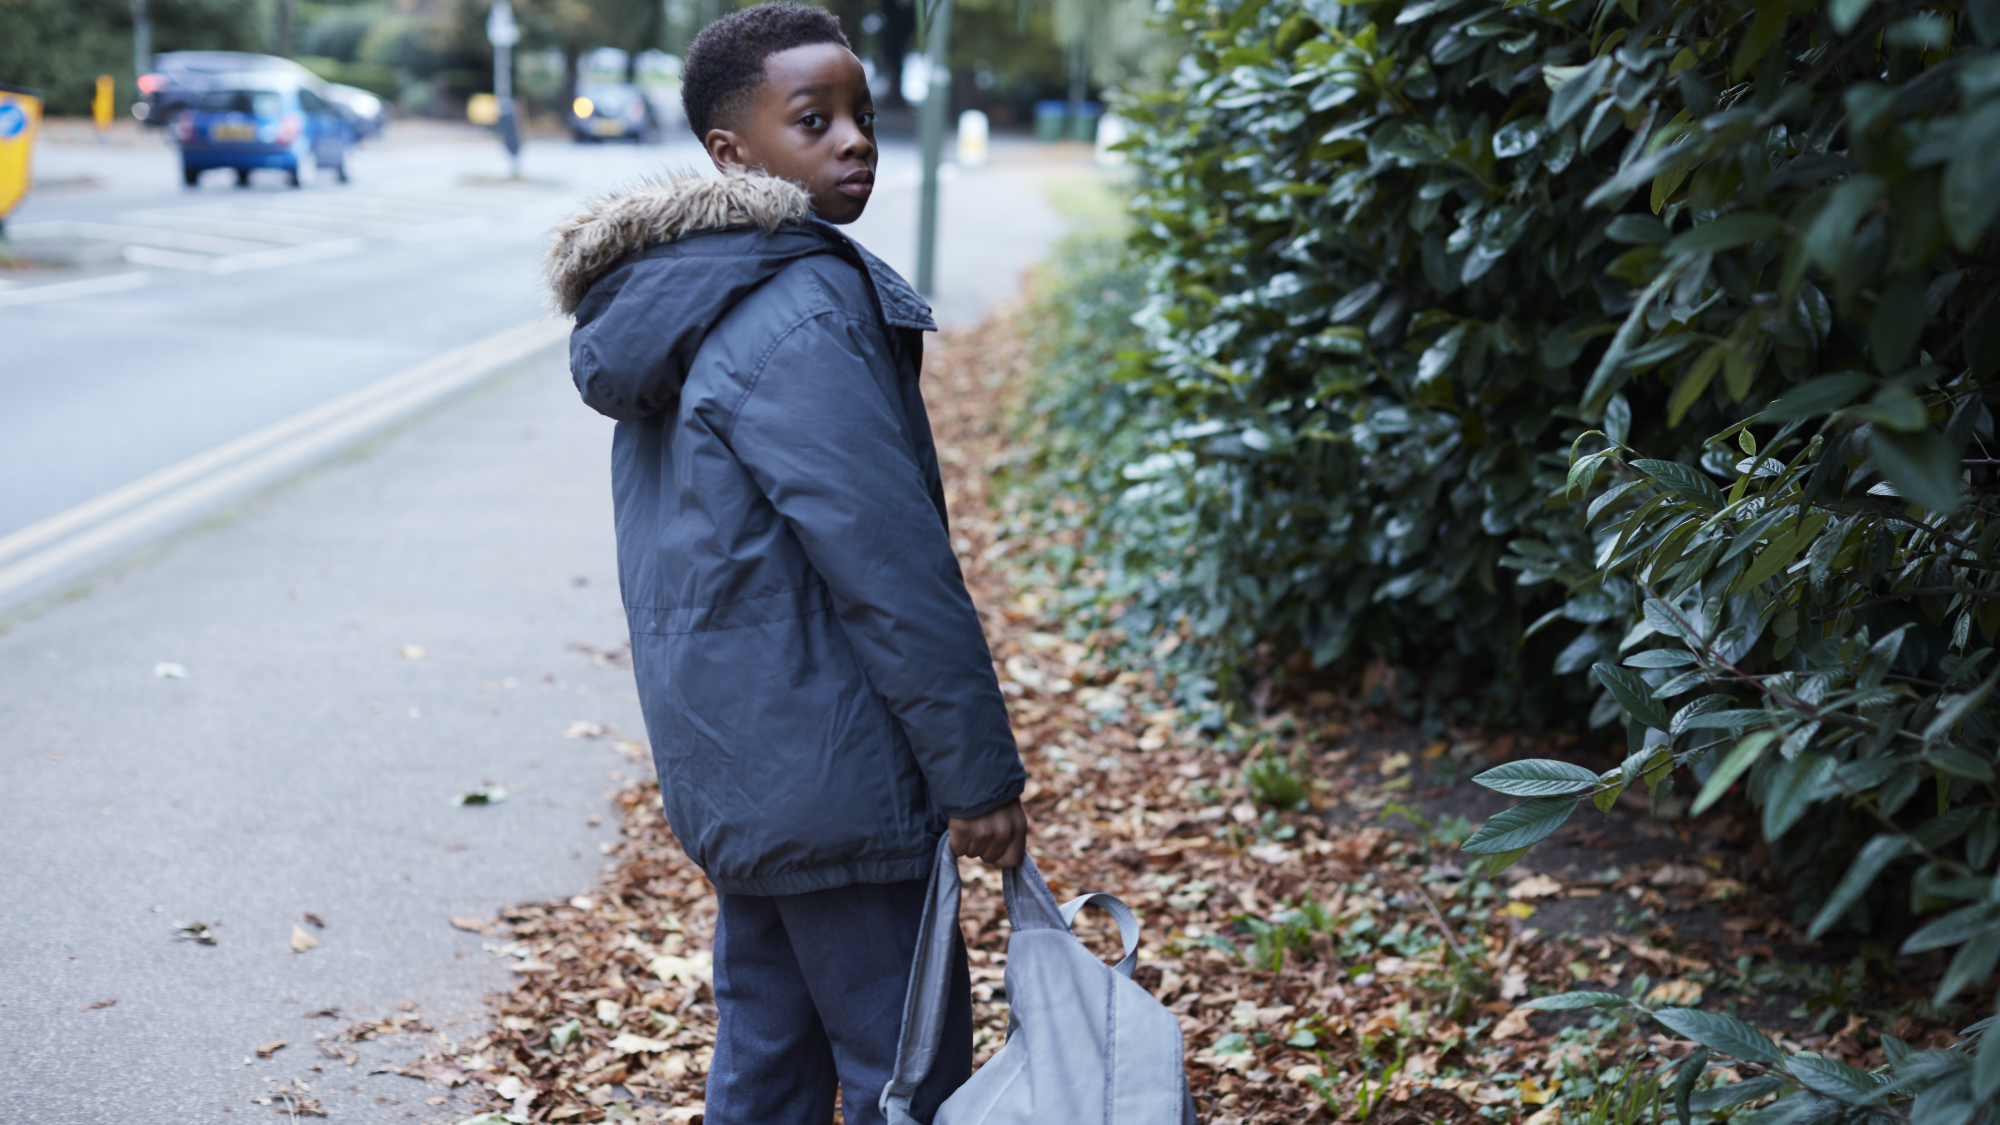 Young boy standing outside in street wearing coat